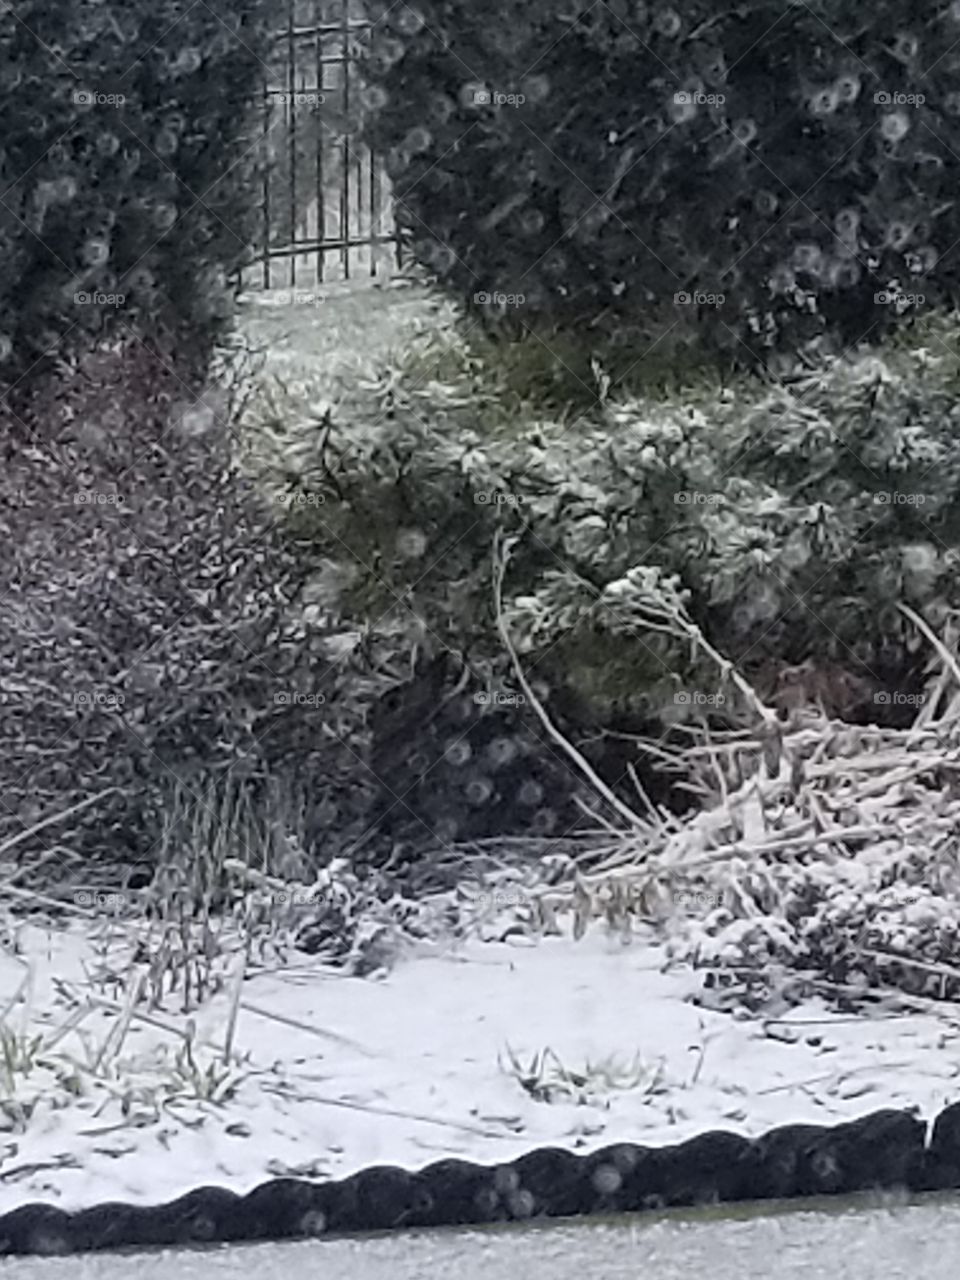 bunny hiding under Bush on snowy day